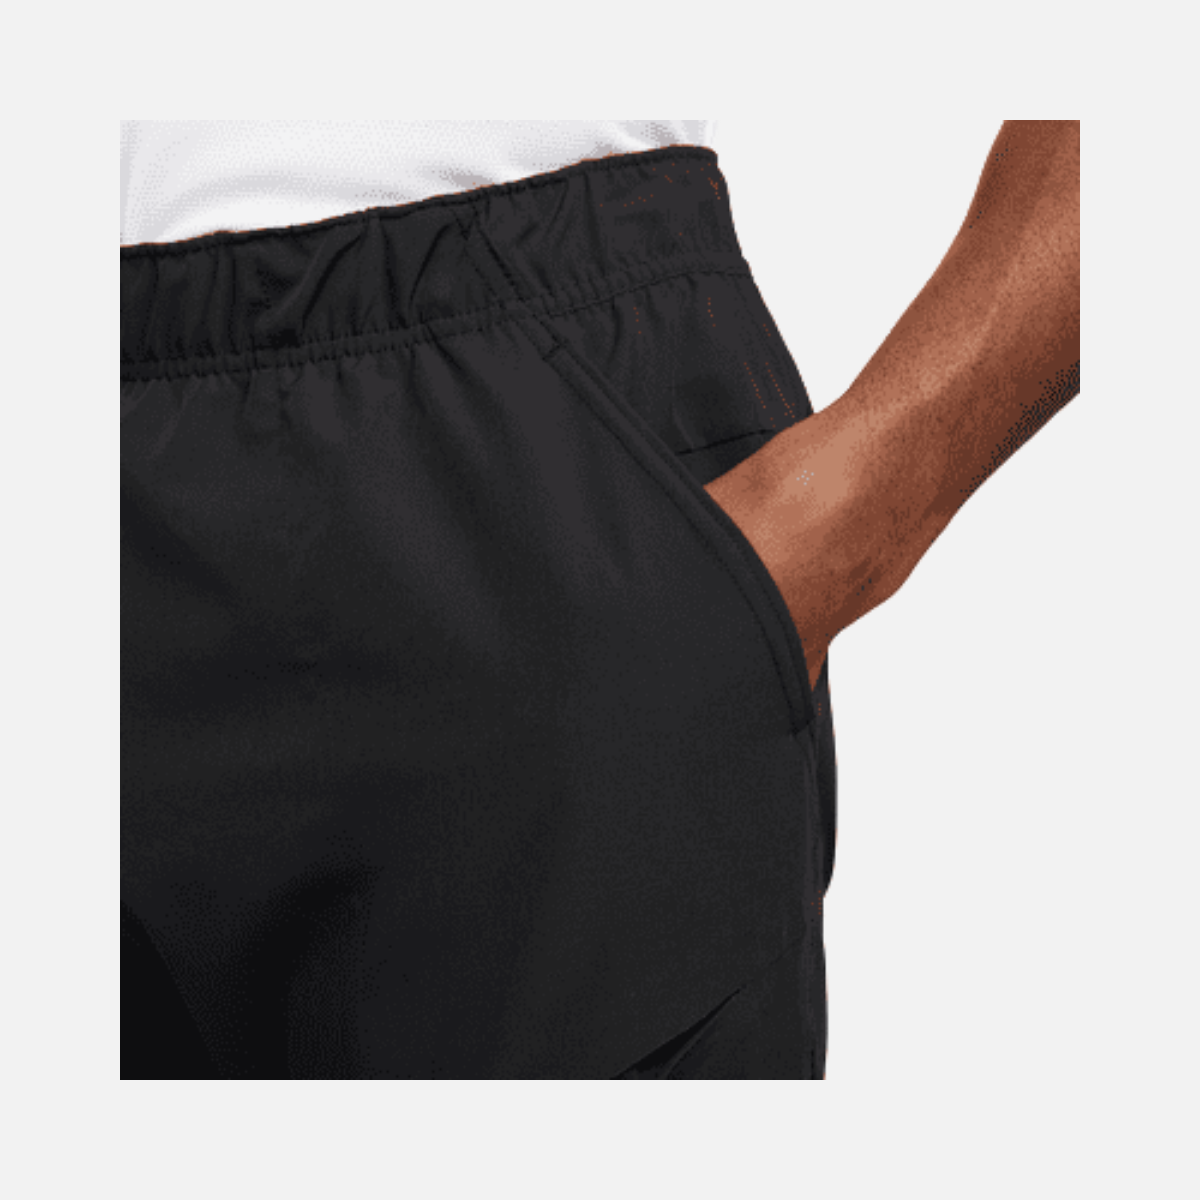 Nike Court Dri-Fit Advantage Men's Tennis Short -Black/White